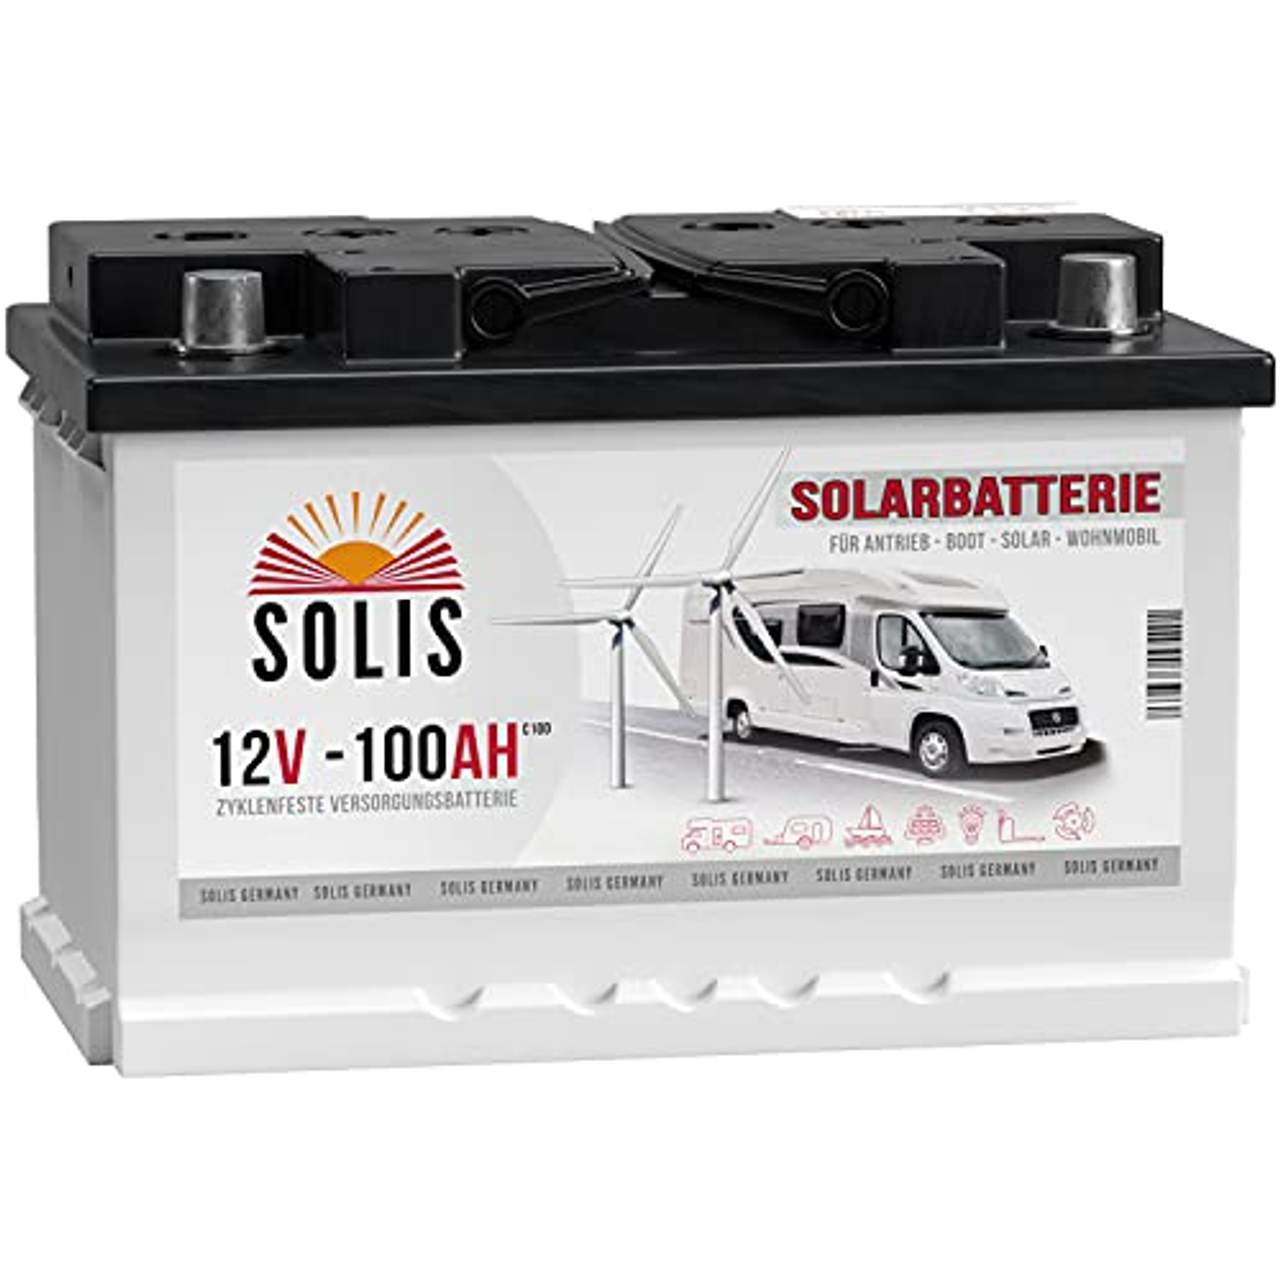 Solis Solarbatterie 100AH 12V Antriebs Versorgungs Boots Wohnmobil